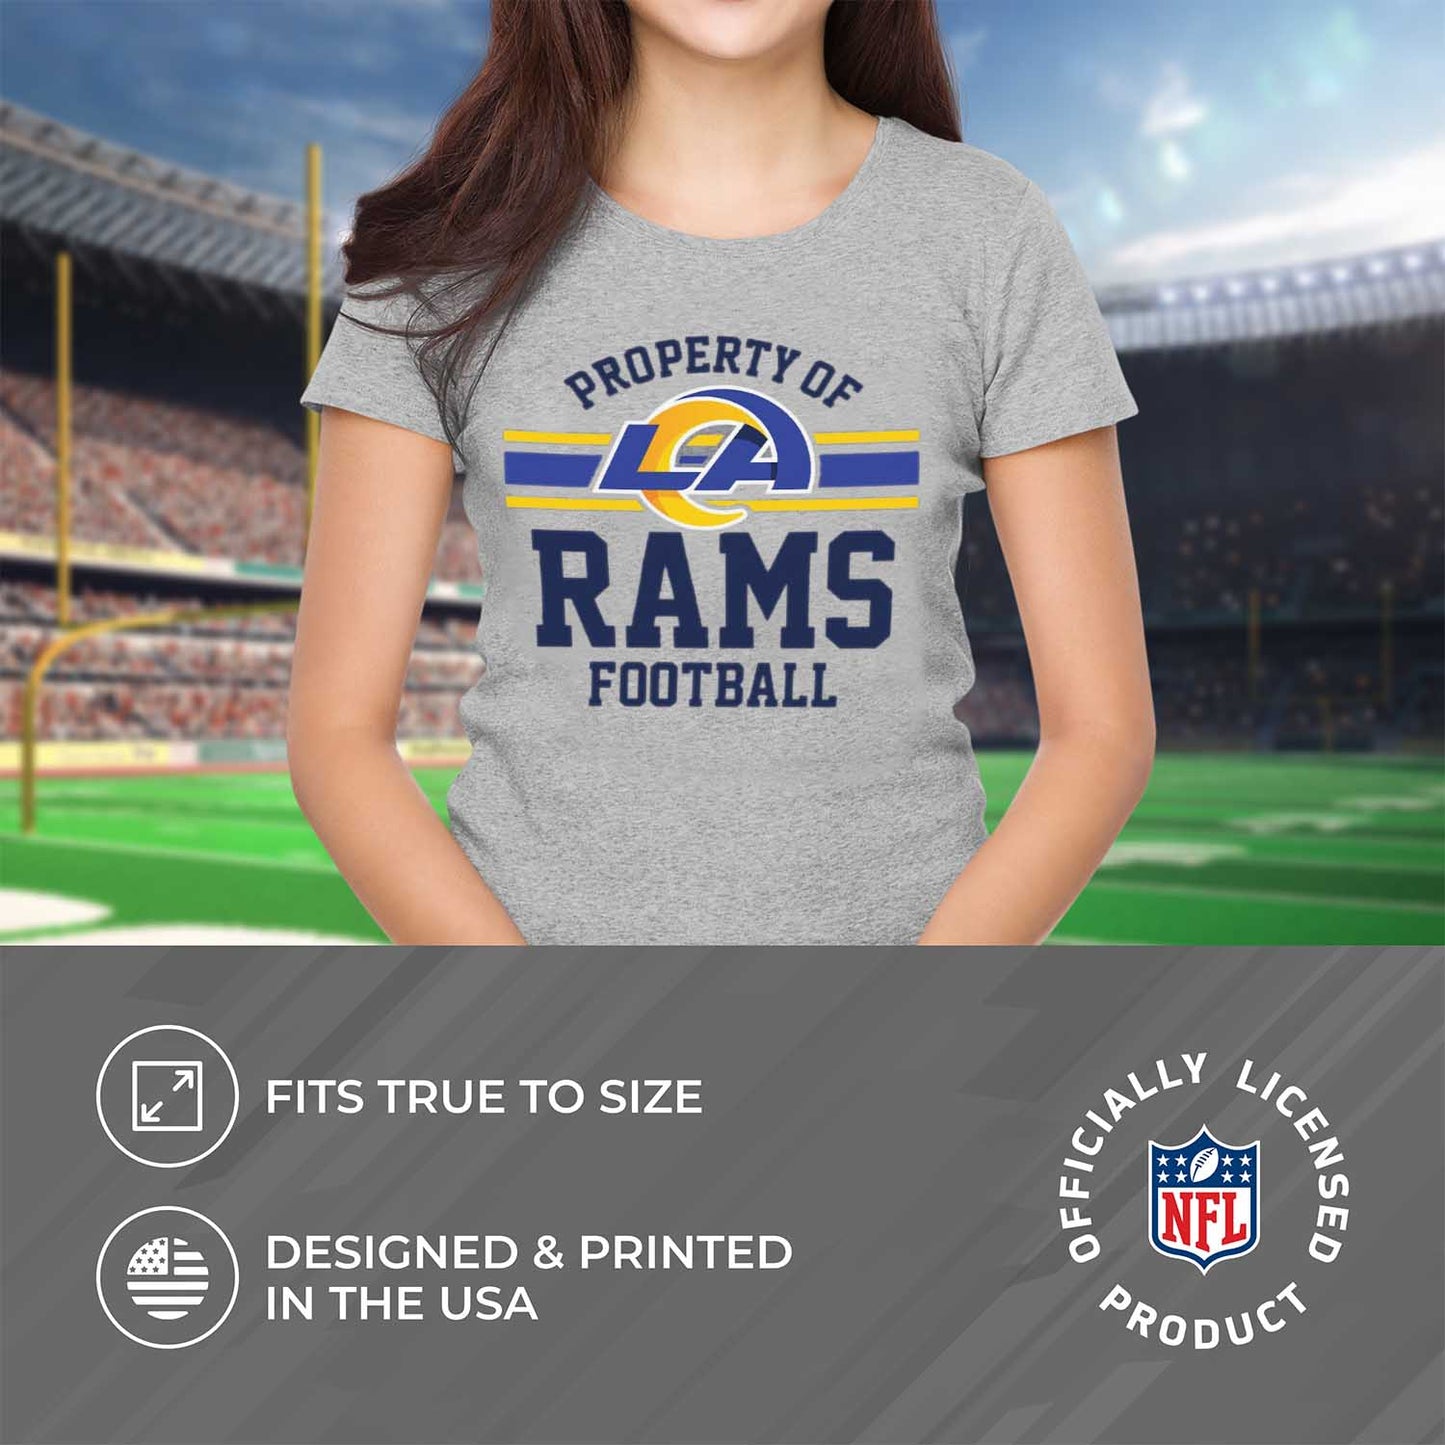 Los Angeles Rams NFL Womens Short Sleeve Property of Tshirt - Gray